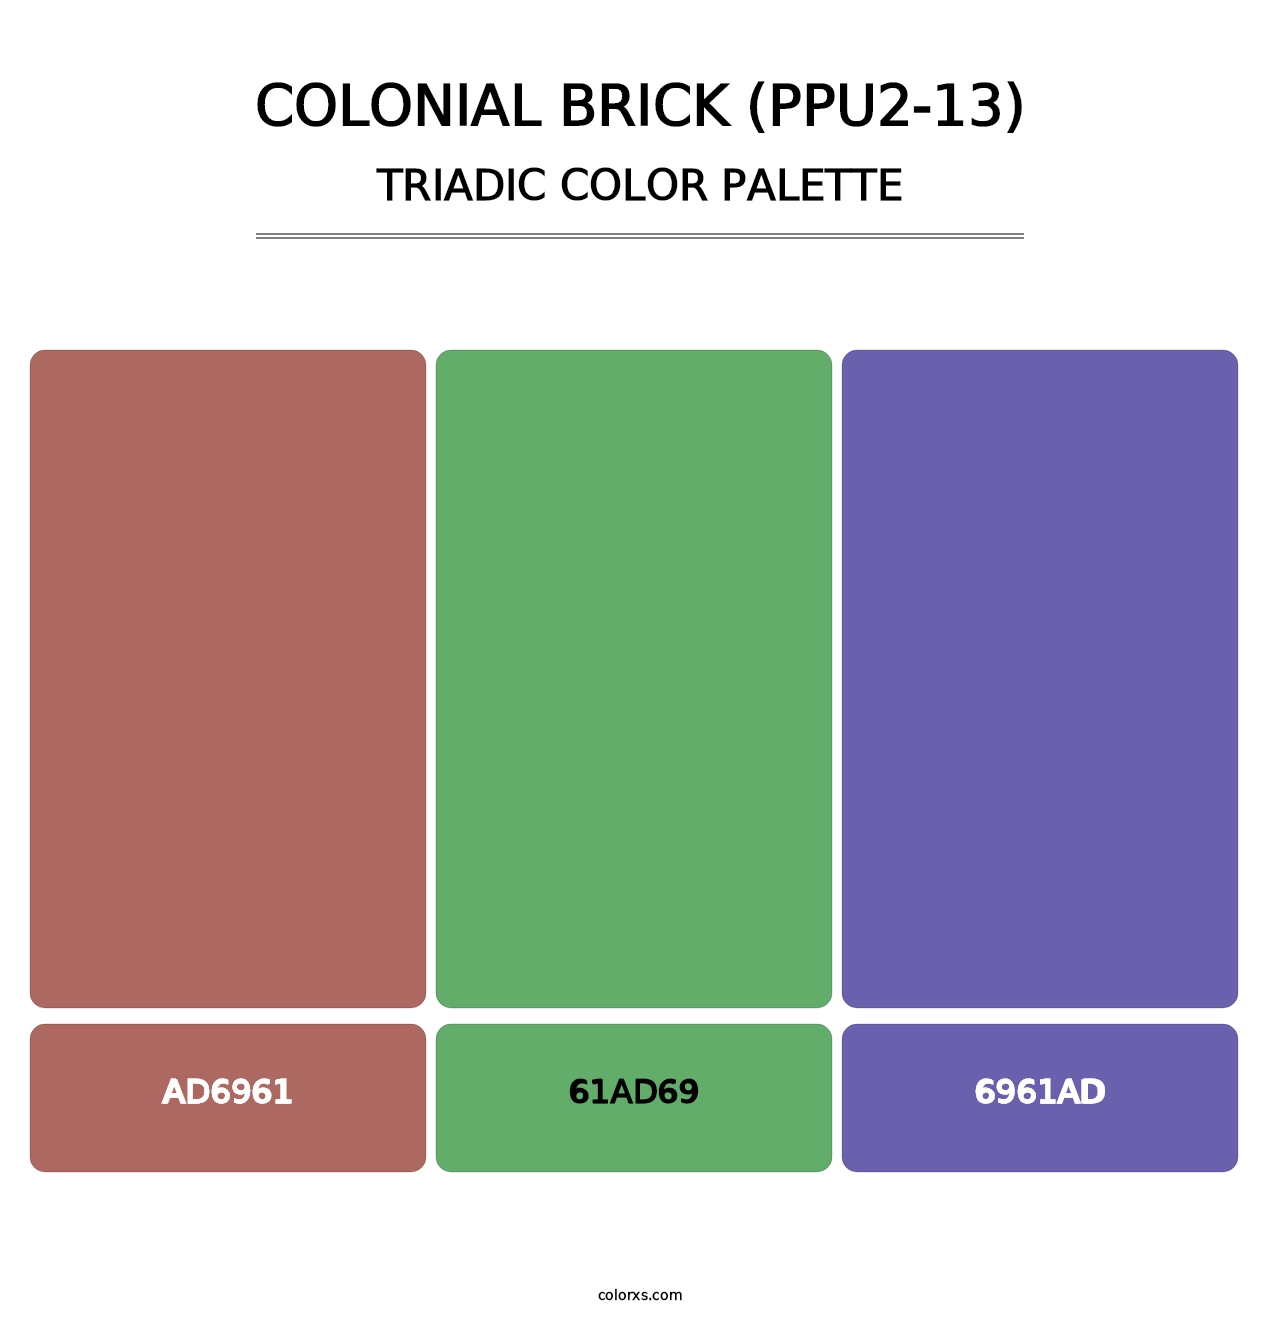 Colonial Brick (PPU2-13) - Triadic Color Palette